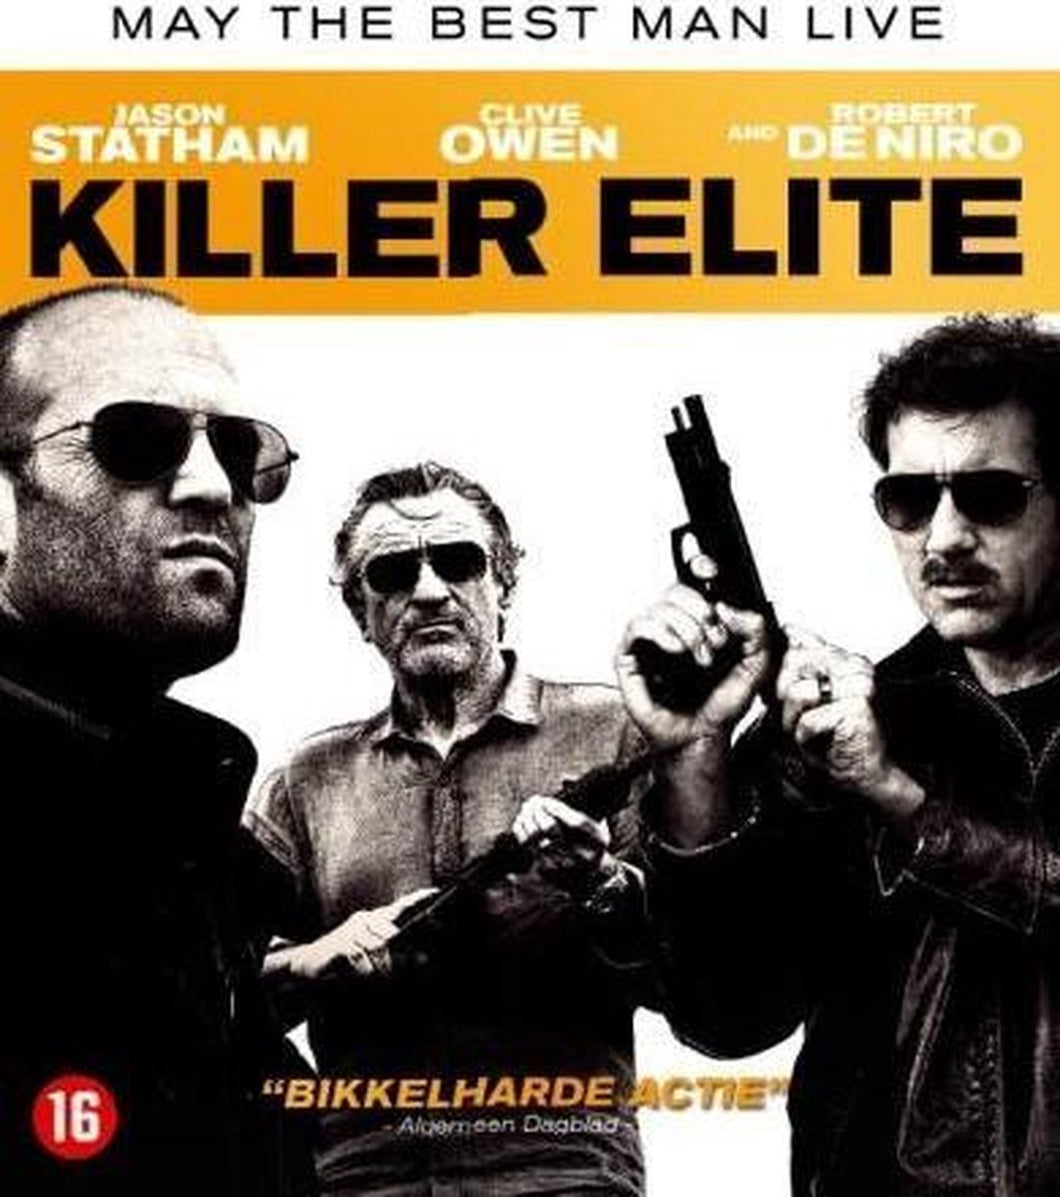 * USED * Killer elite / Blu-ray